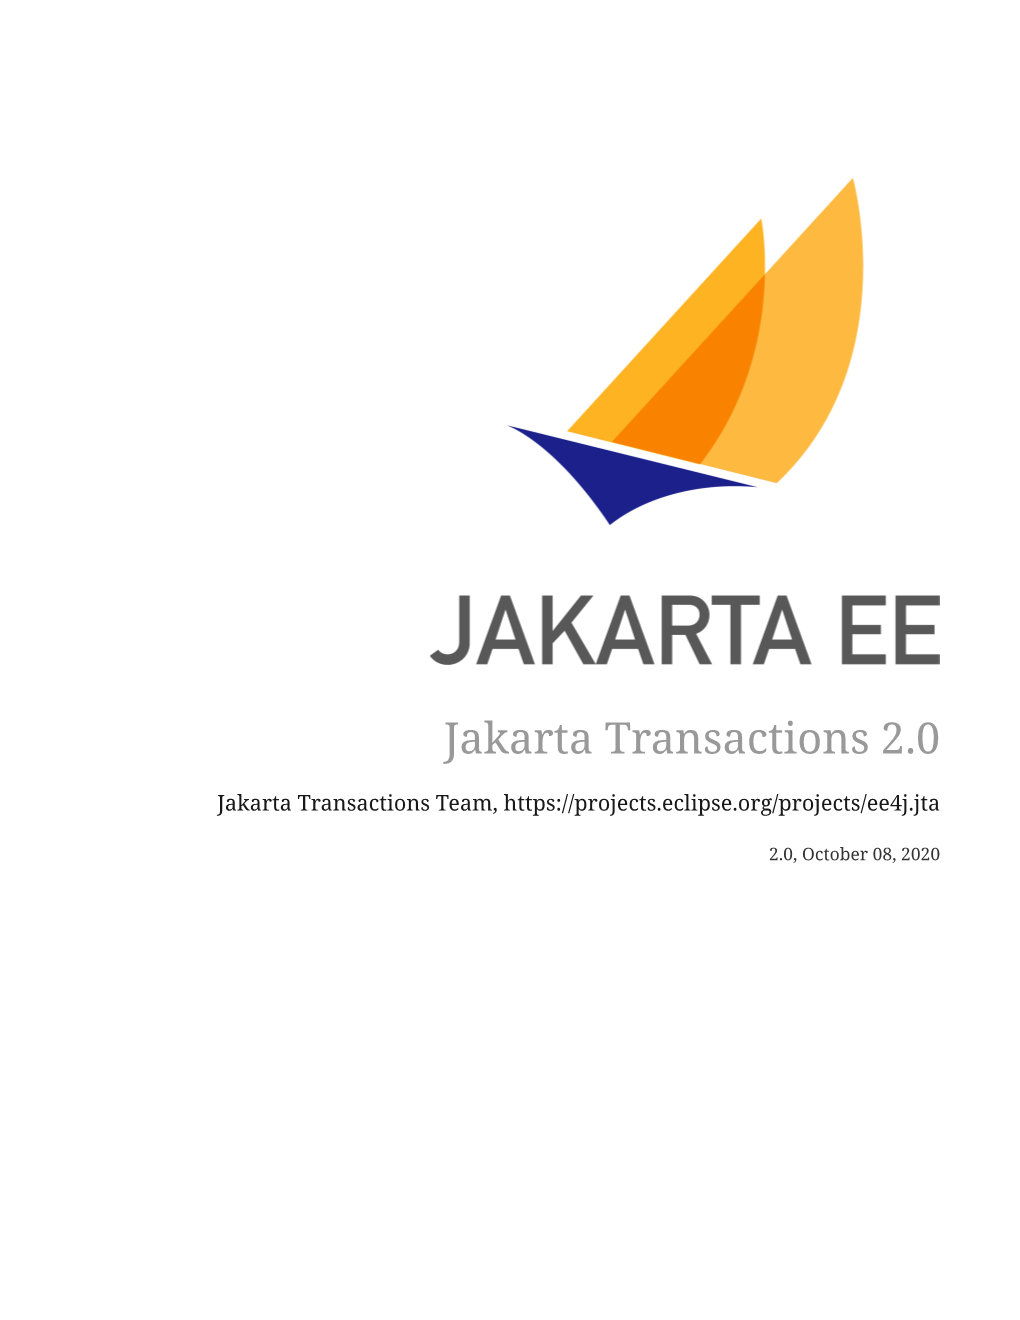 Jakarta Transactions 2.0 Specification Document